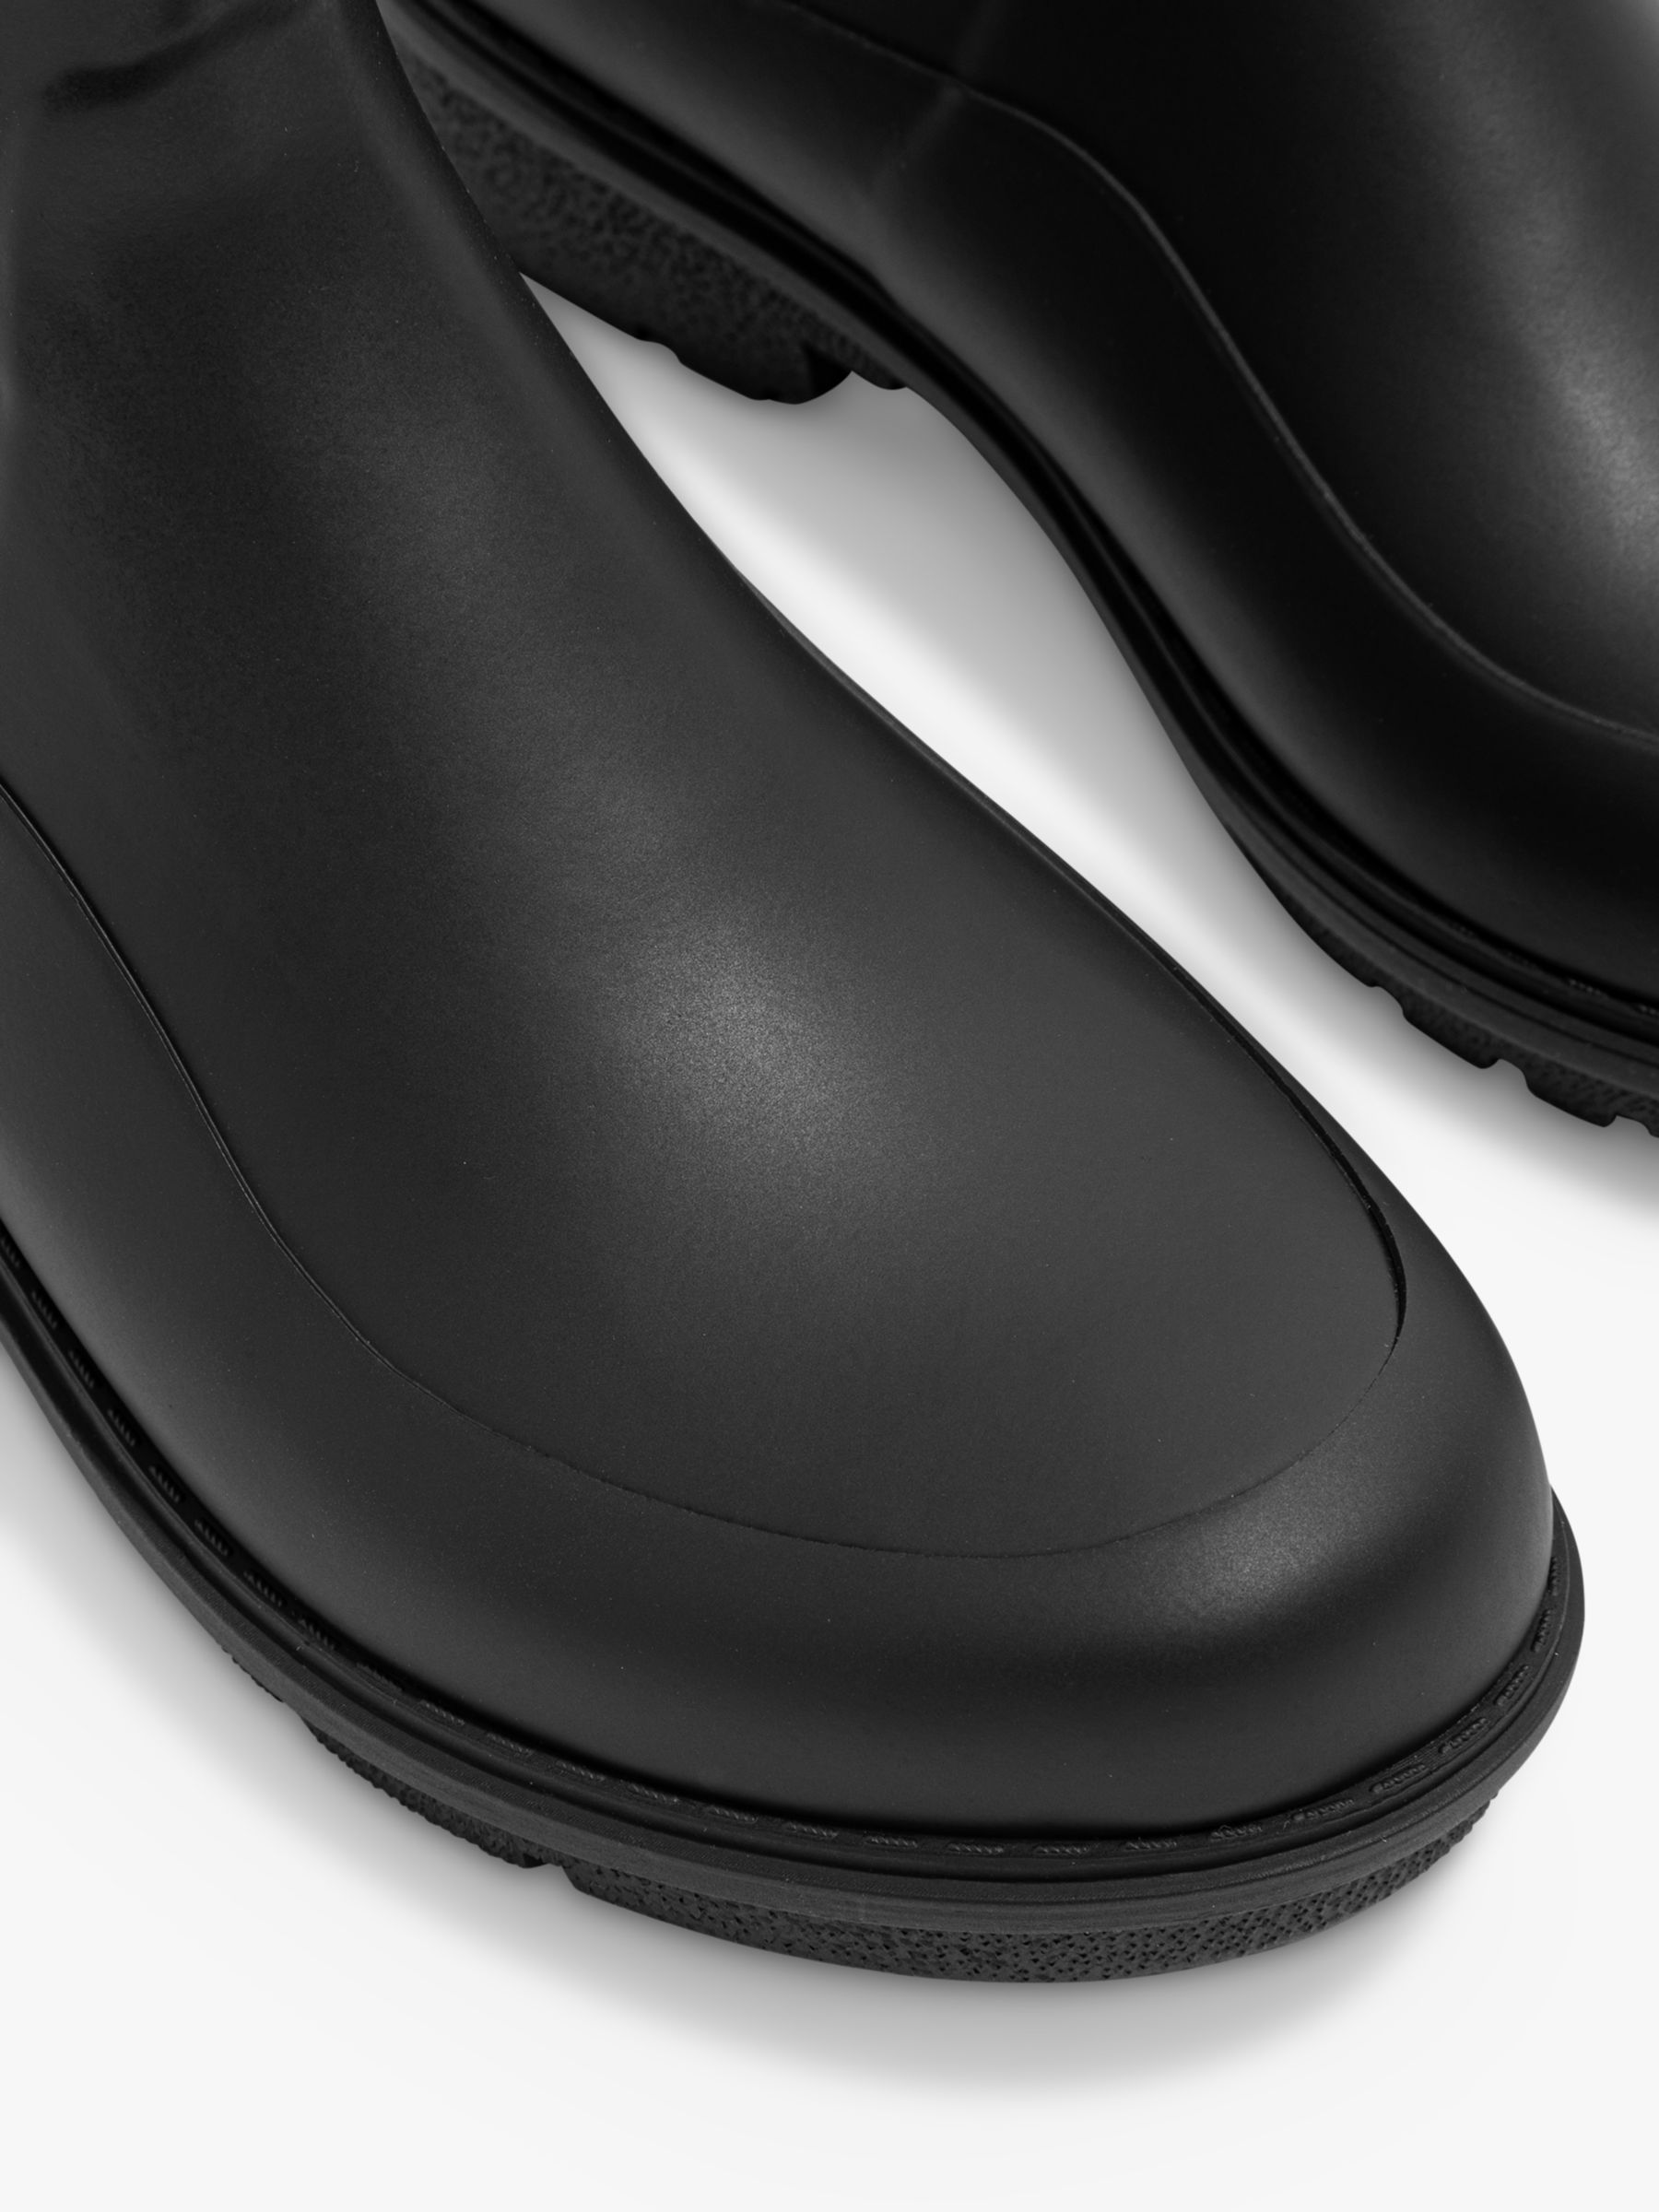 FitFlop WonderWelly Short Chelsea Wellington Boots, Black, 3